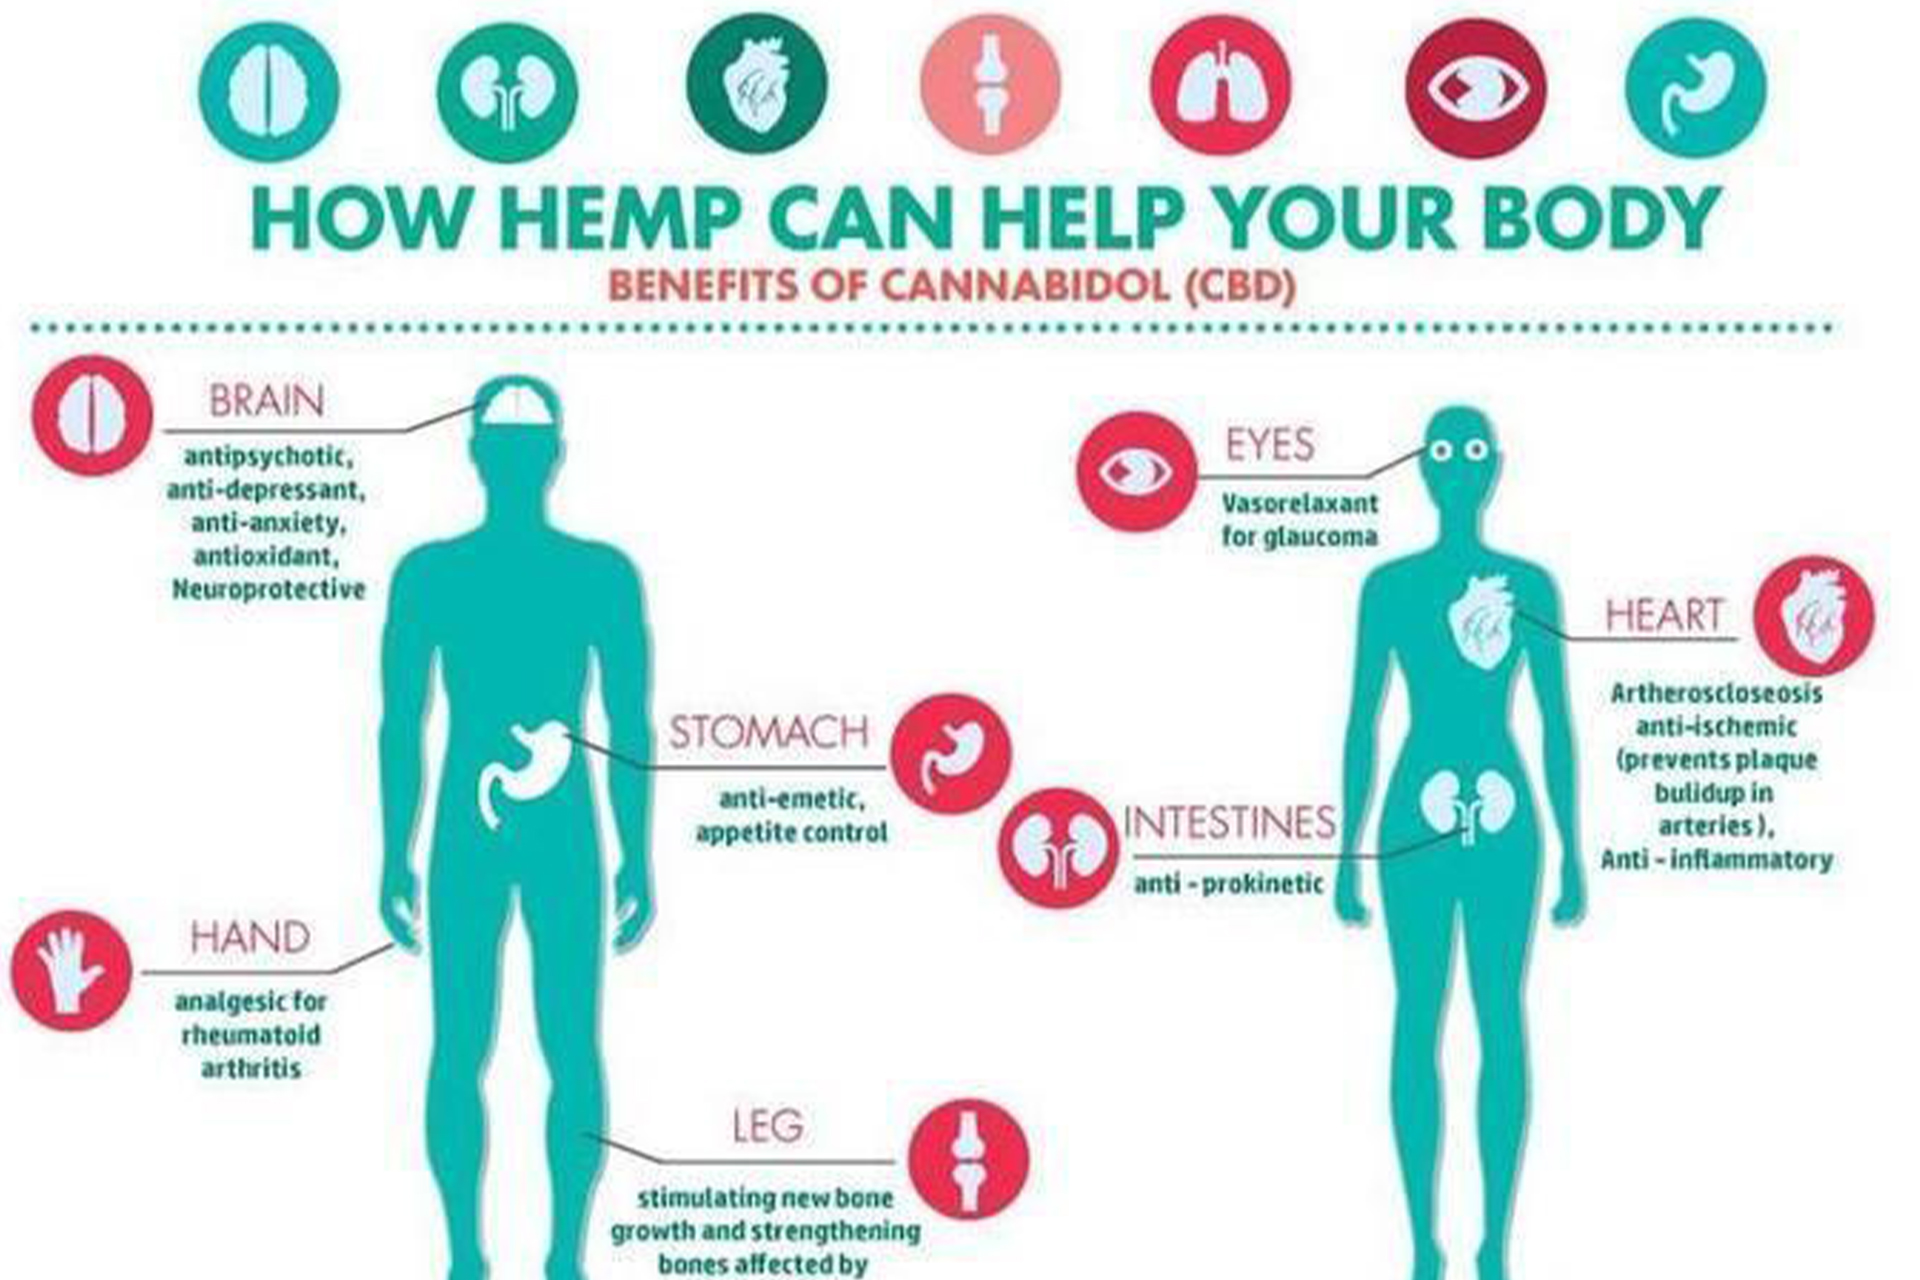 An Infographic describing how Hemp can help your body.